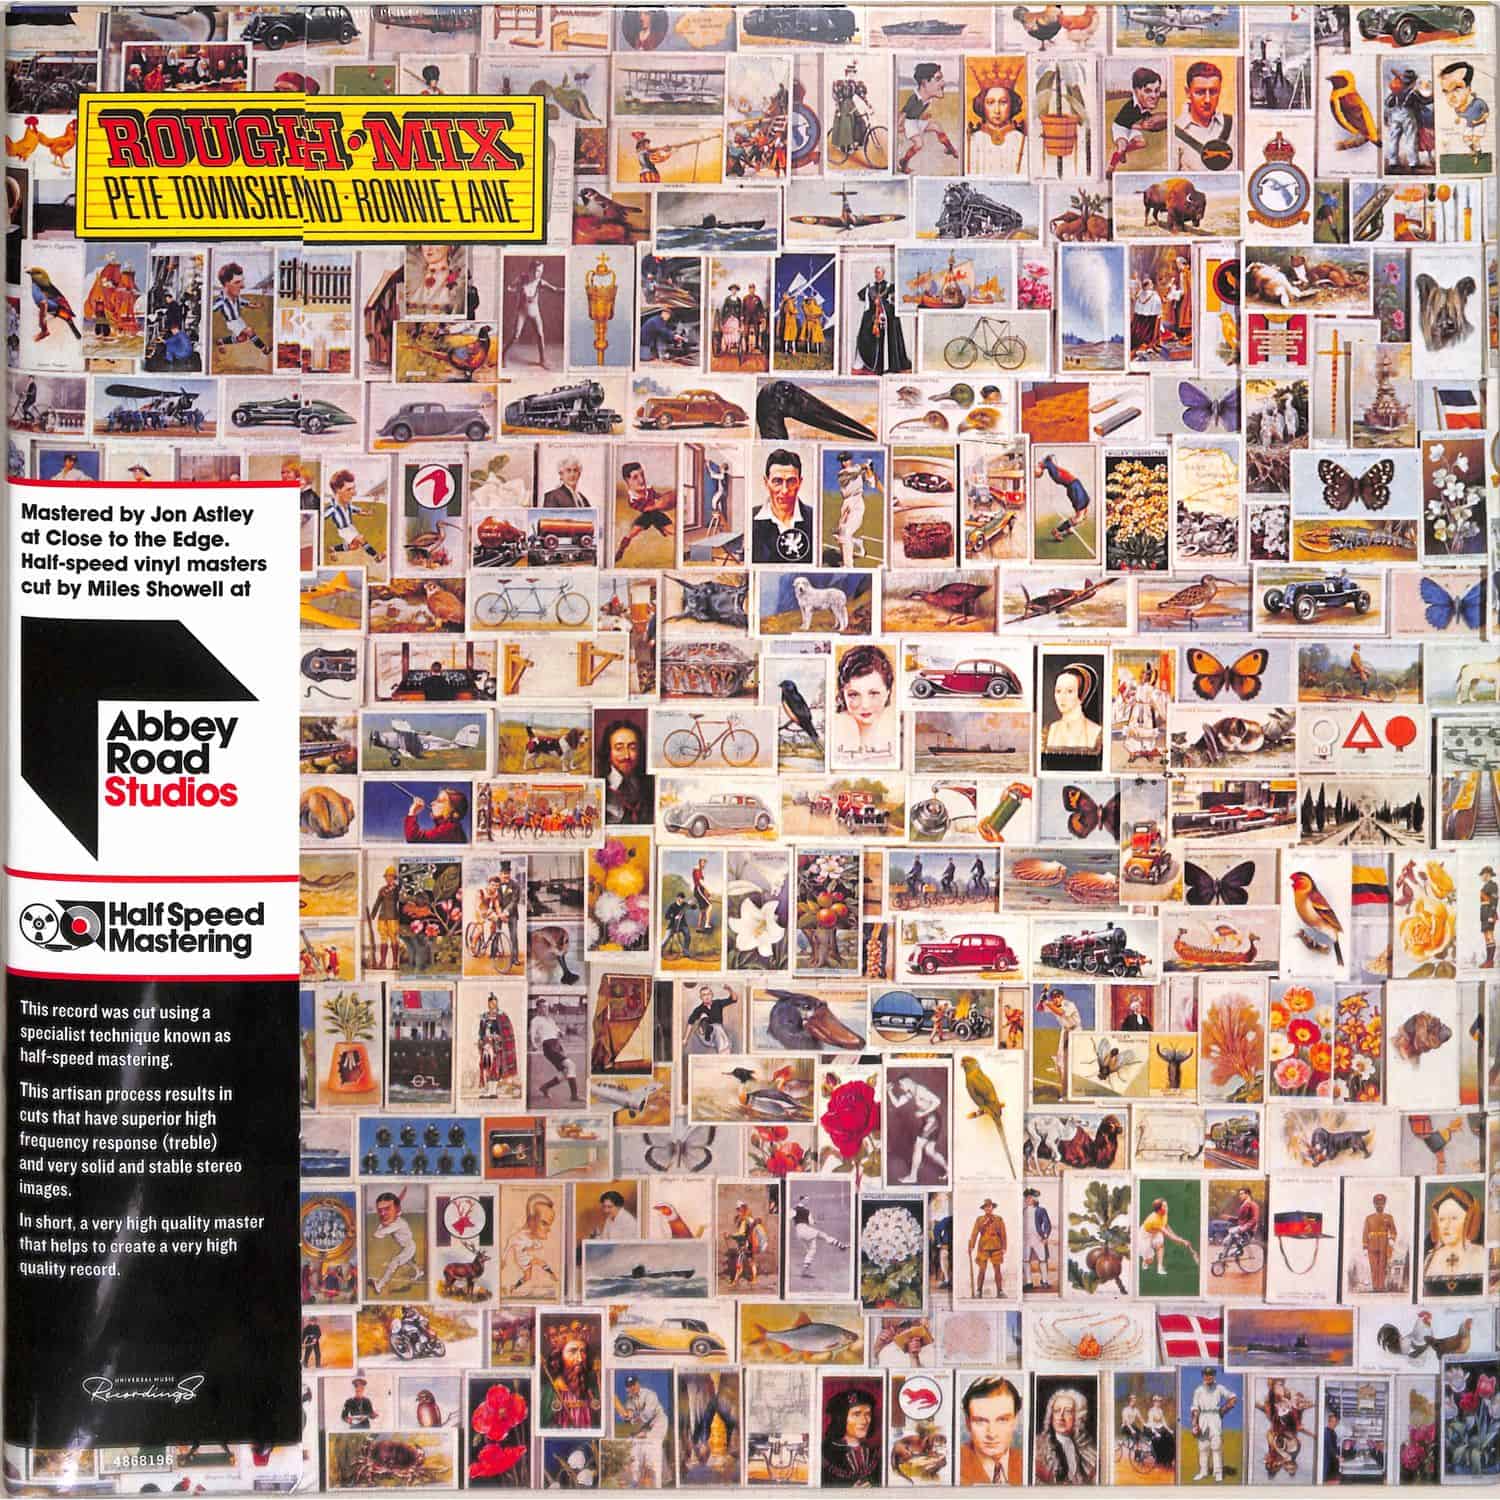  Pete Townshend / Ronnie Lane - ROUGH MIX 